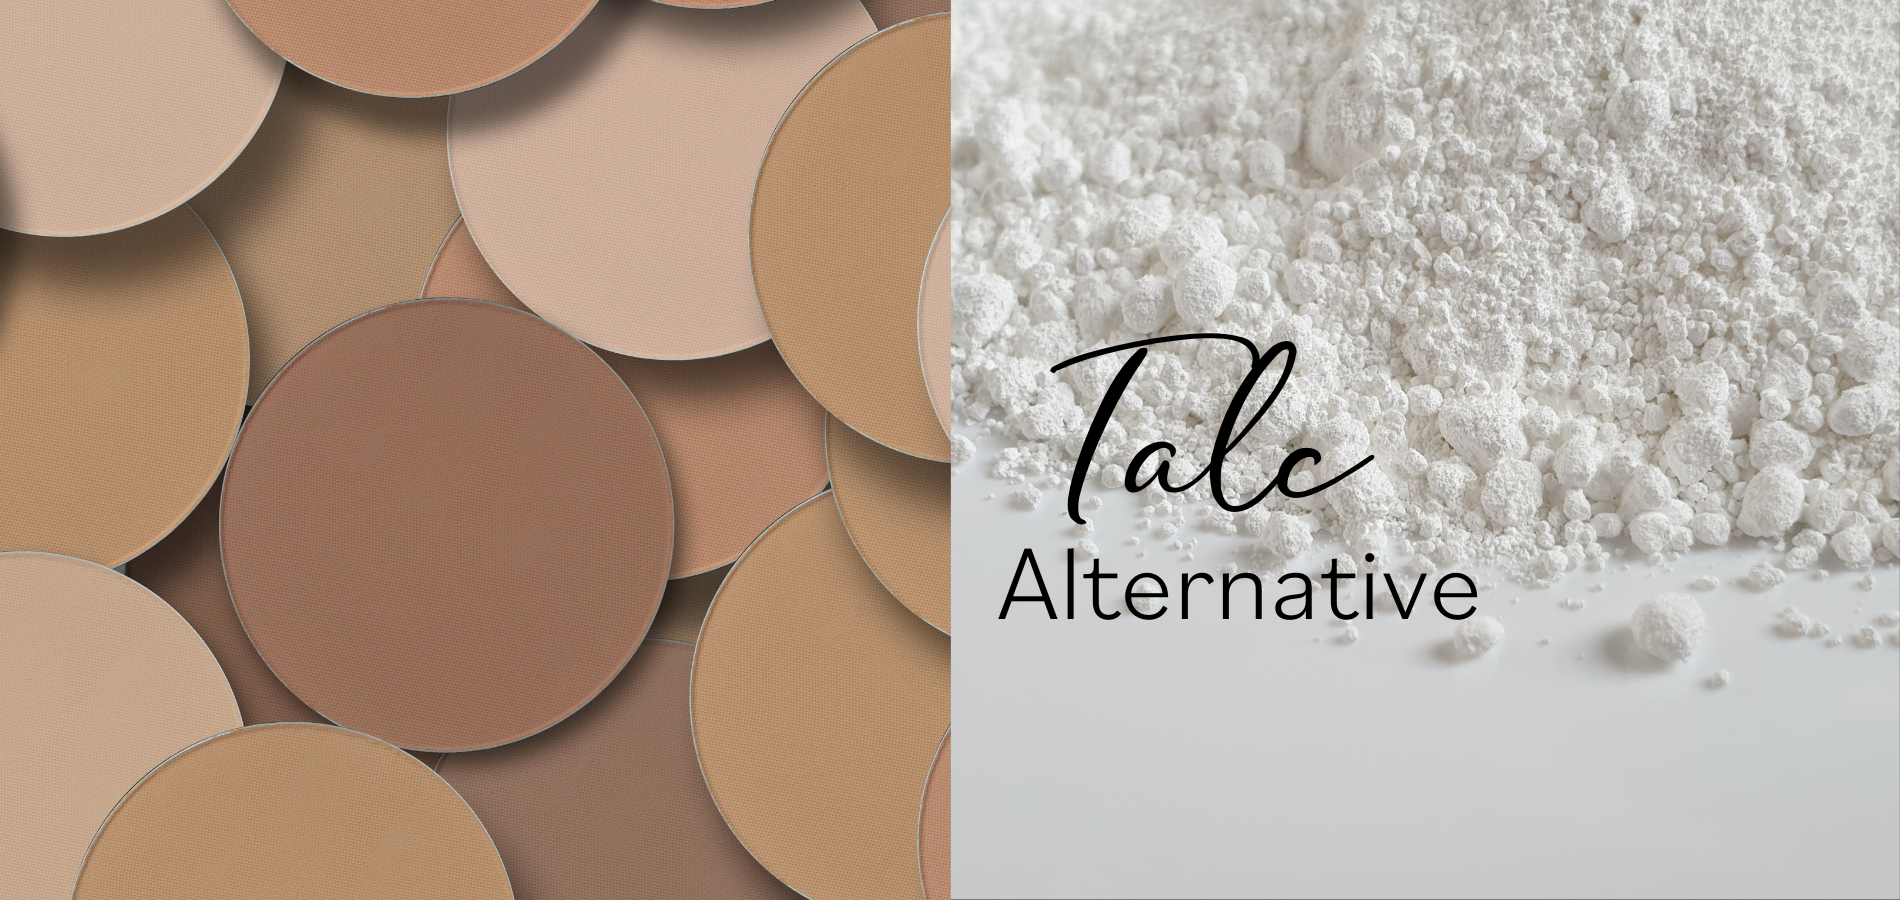 Talc Alternatives Website Featured Image